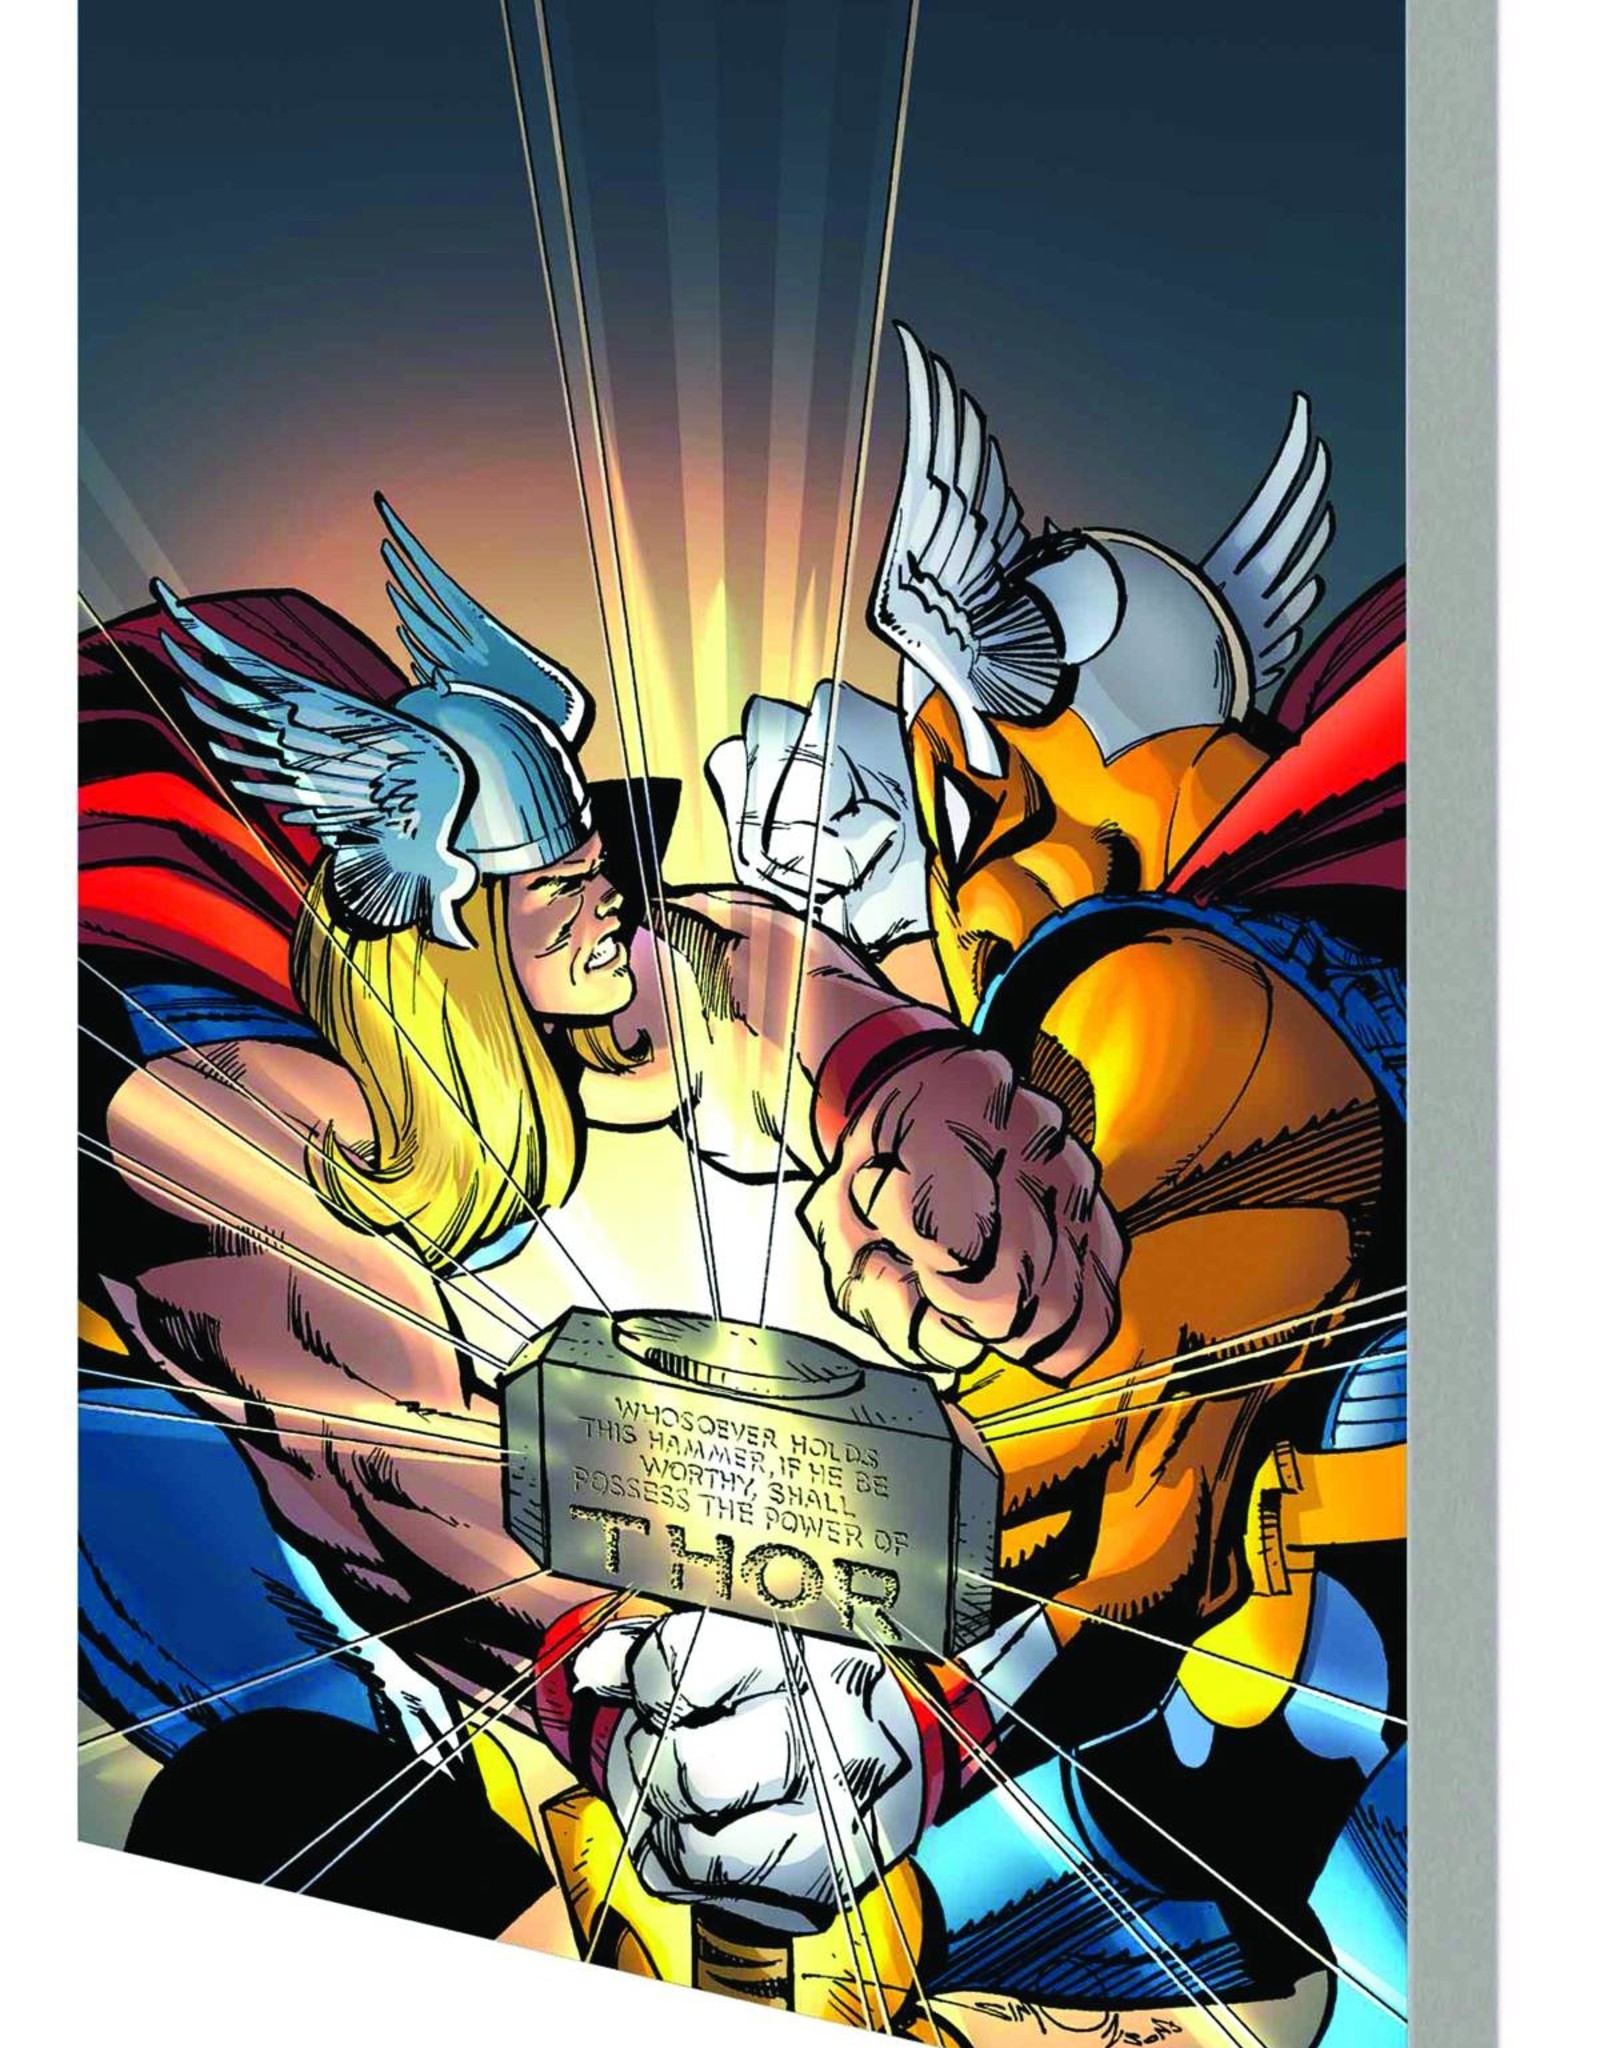 Marvel Comics Thor by Walter Simonson TP Volume 01